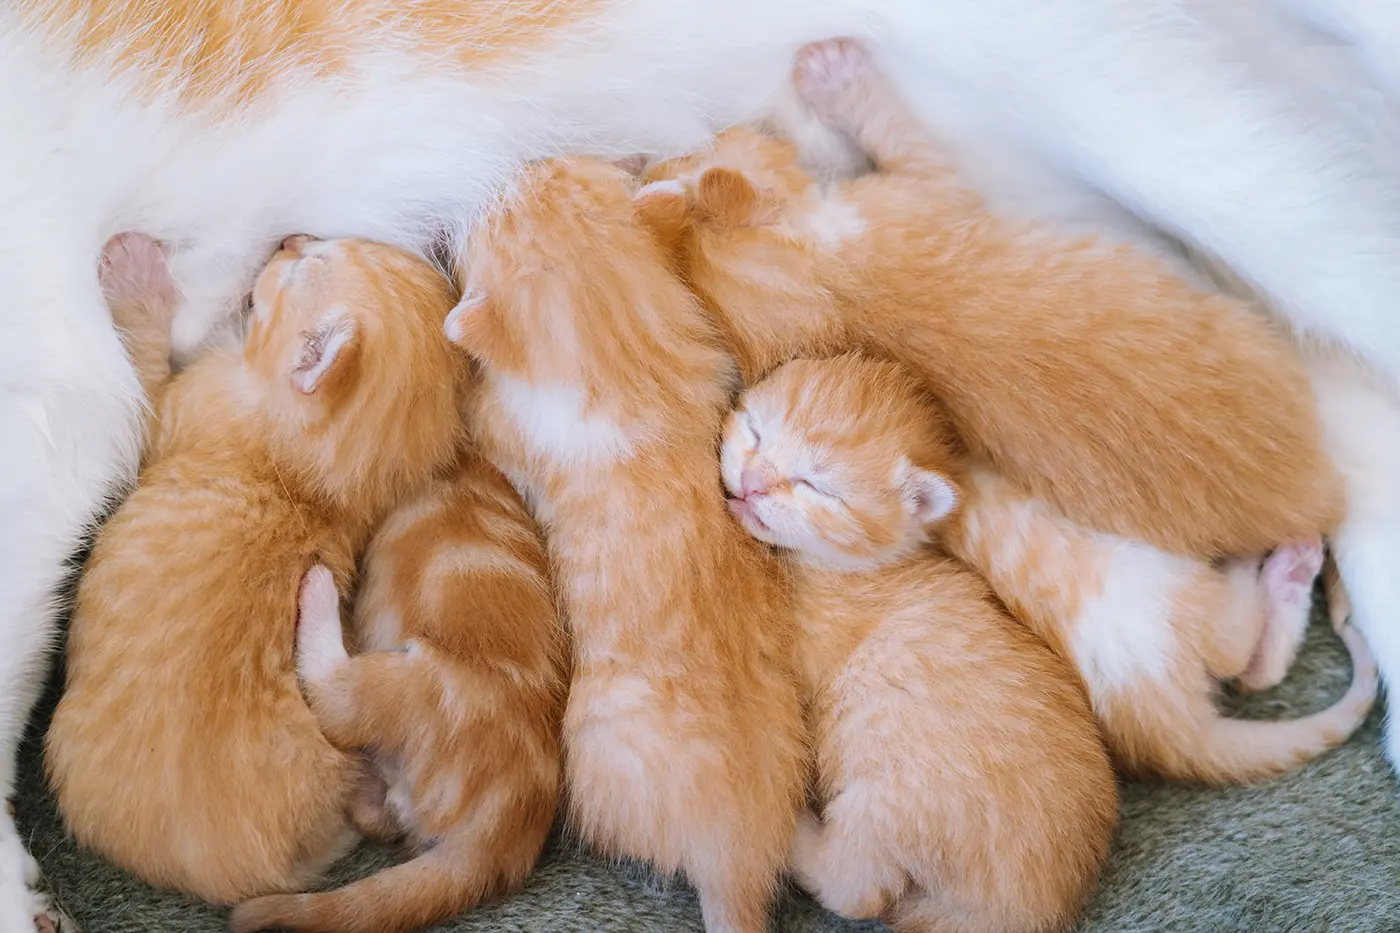 Tanda-tanda kehamilan pada kucing dan bagaimana kita dapat membantu kucing kita selama kehamilan dan kelahiran